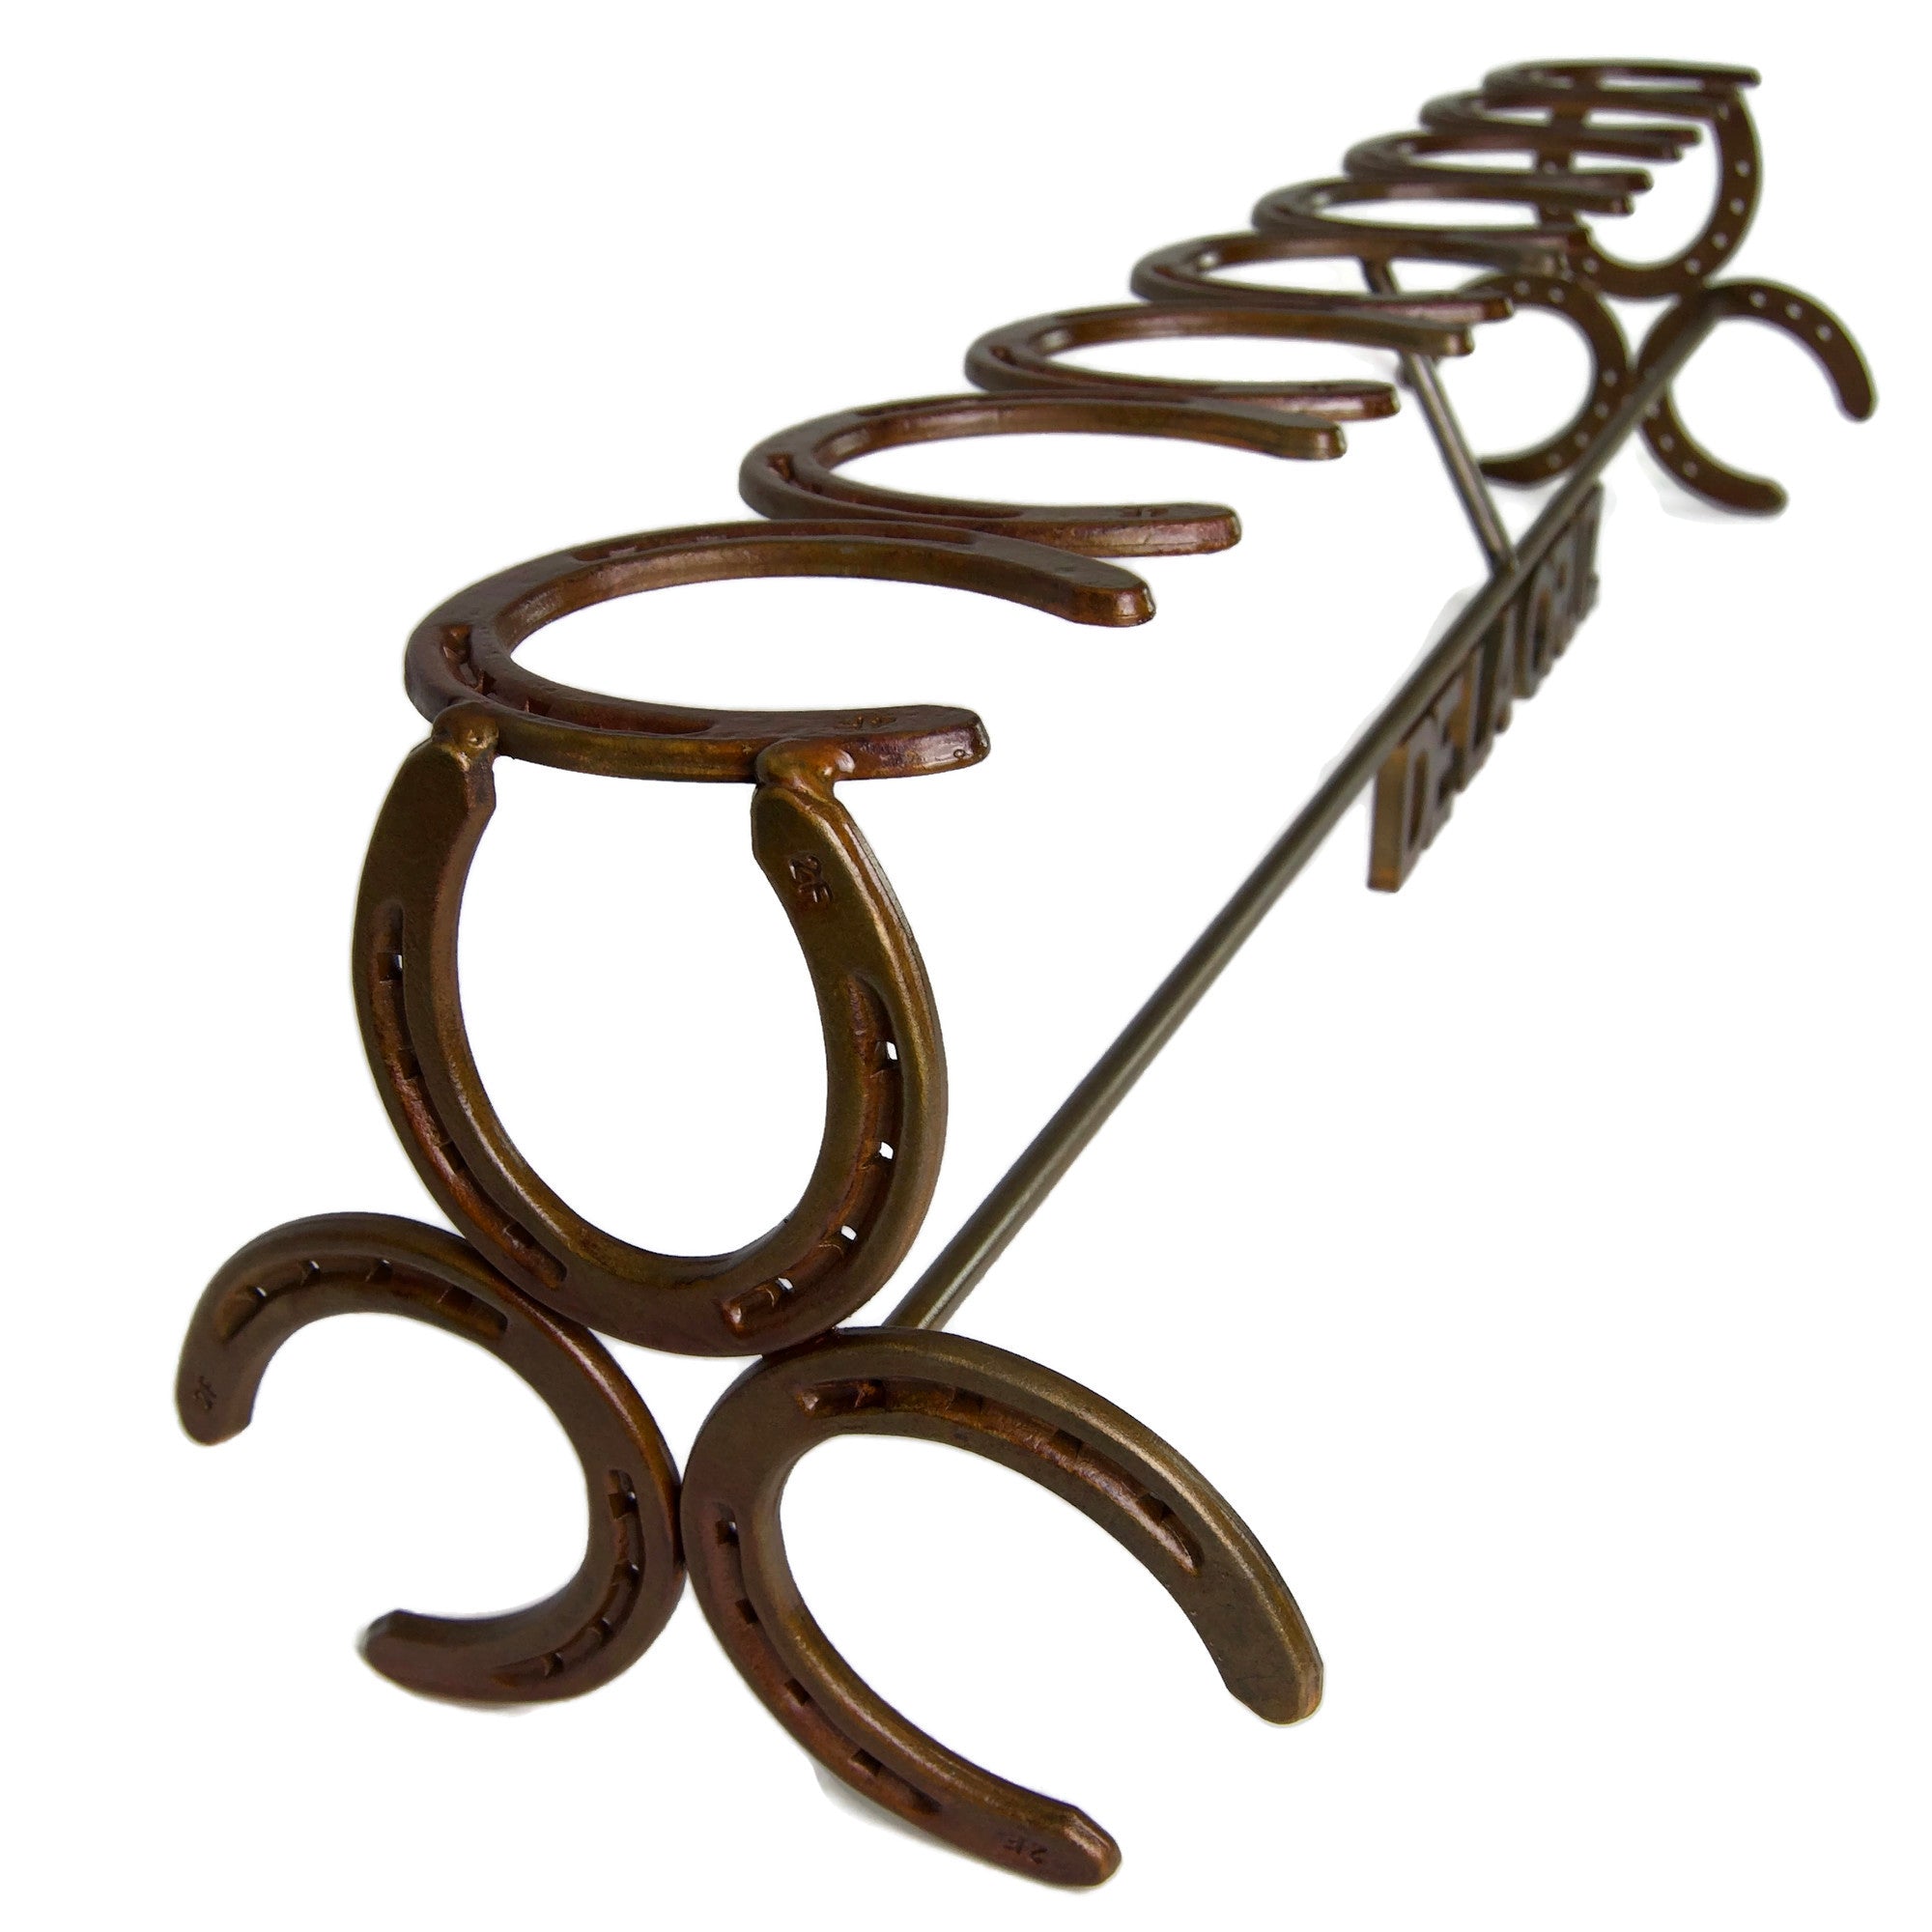 Horseshoe hooks and hangers - The Heritage Forge